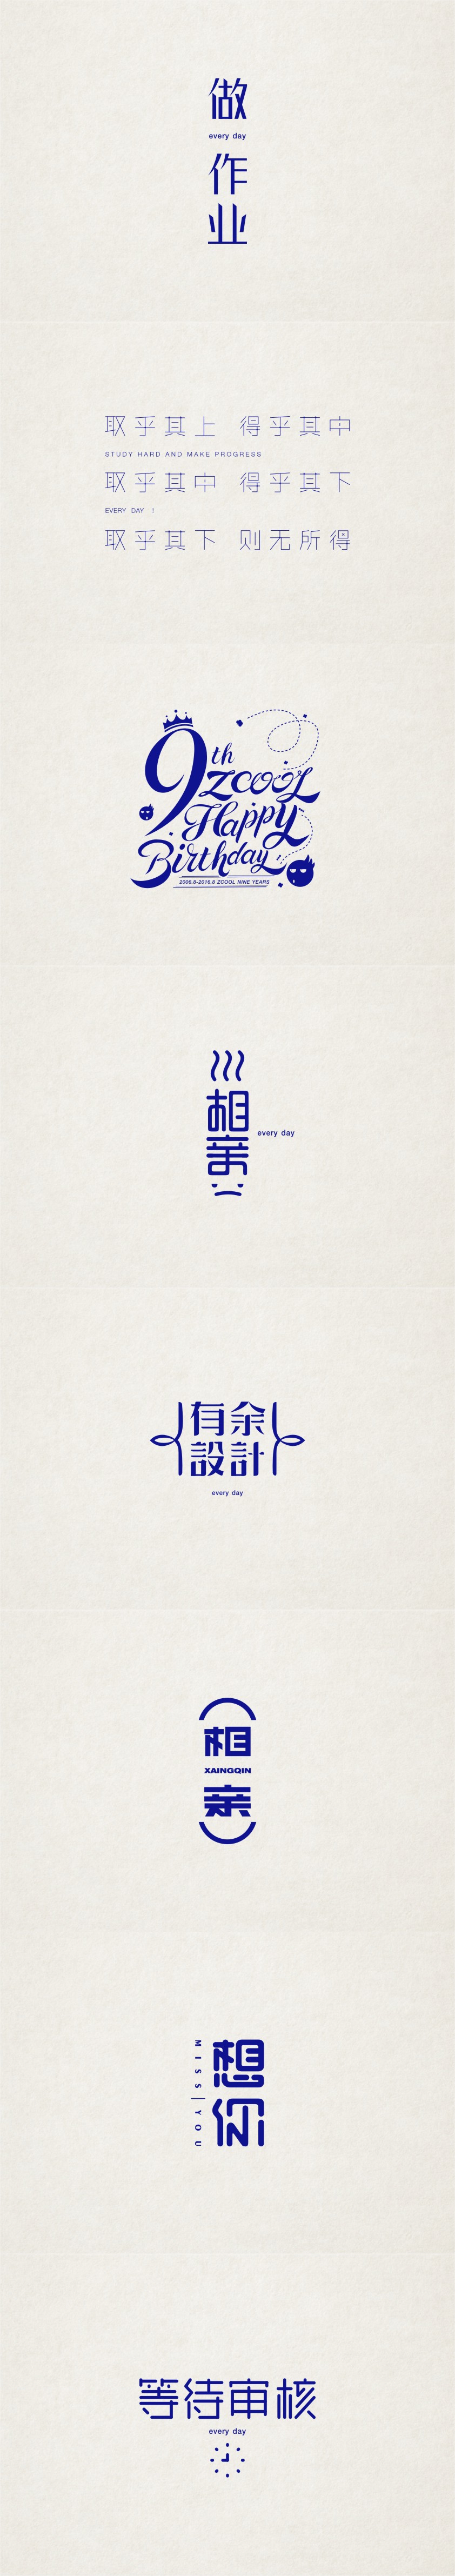 120+ Wonderful idea of the Chinese font logo design #.74